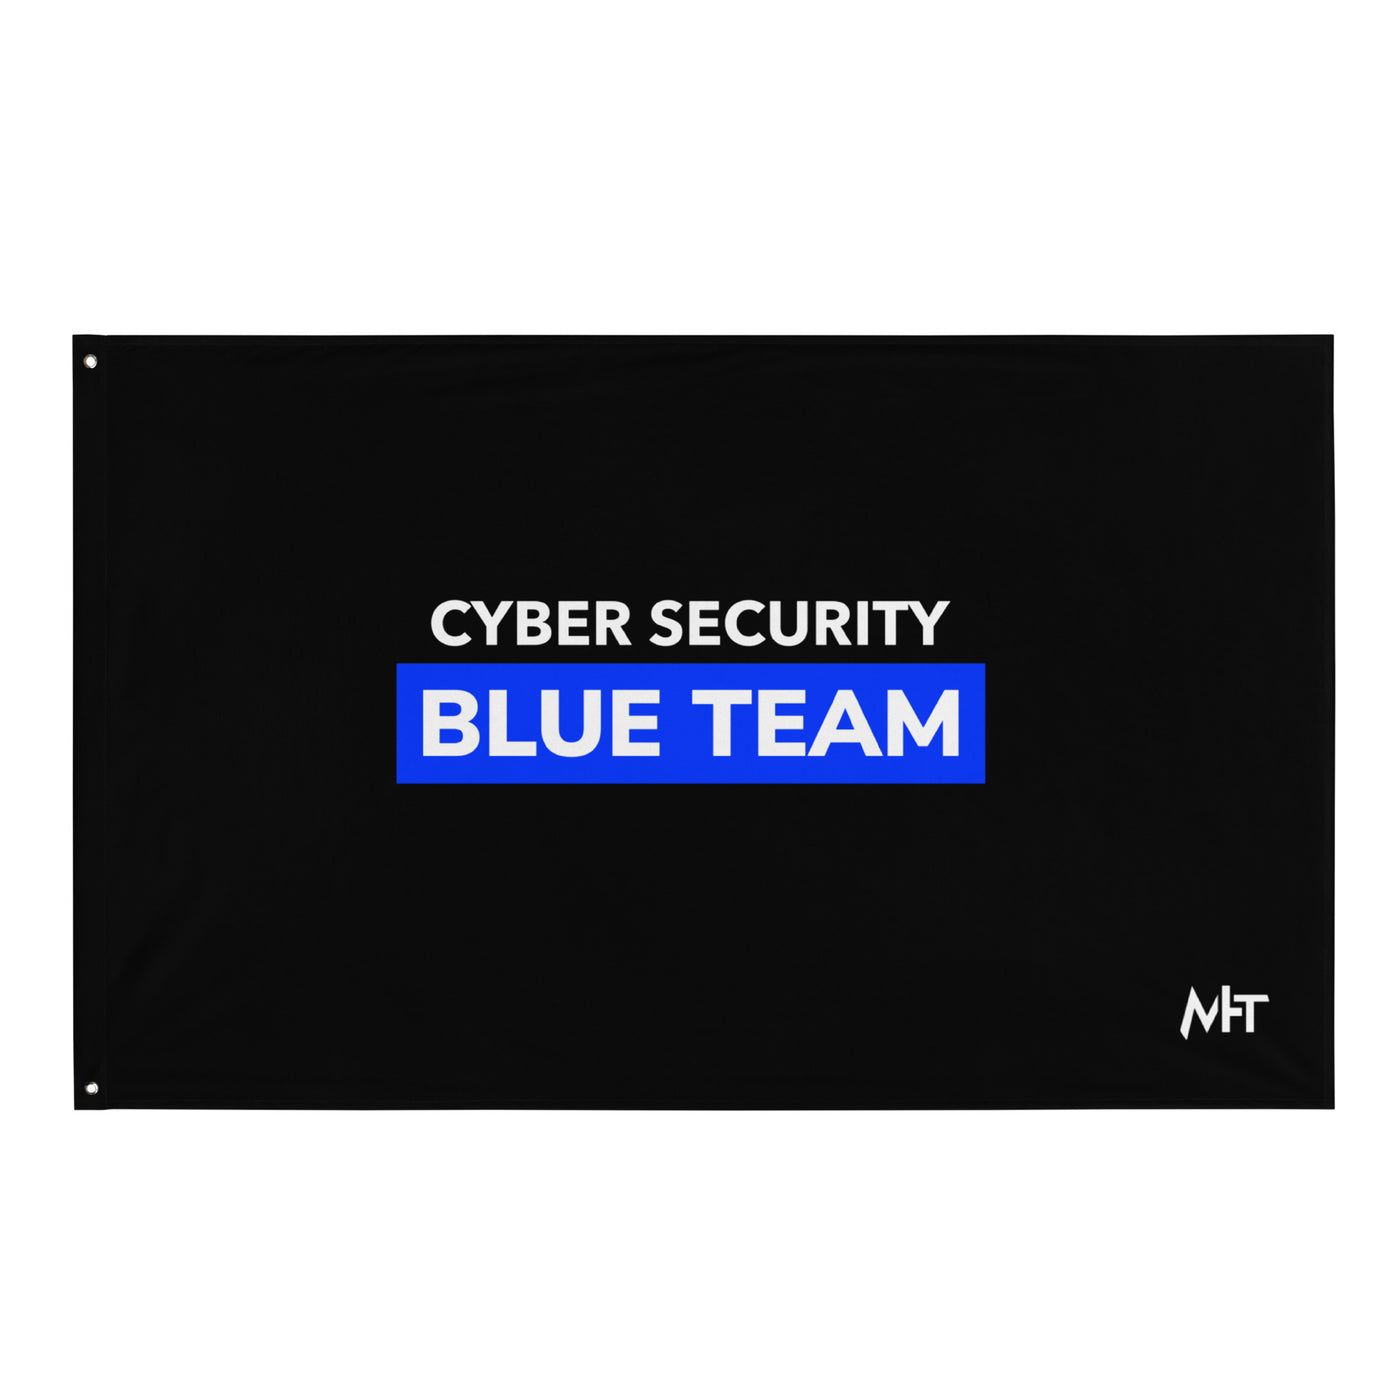 Cyber Security Blue Team V11 - Flag